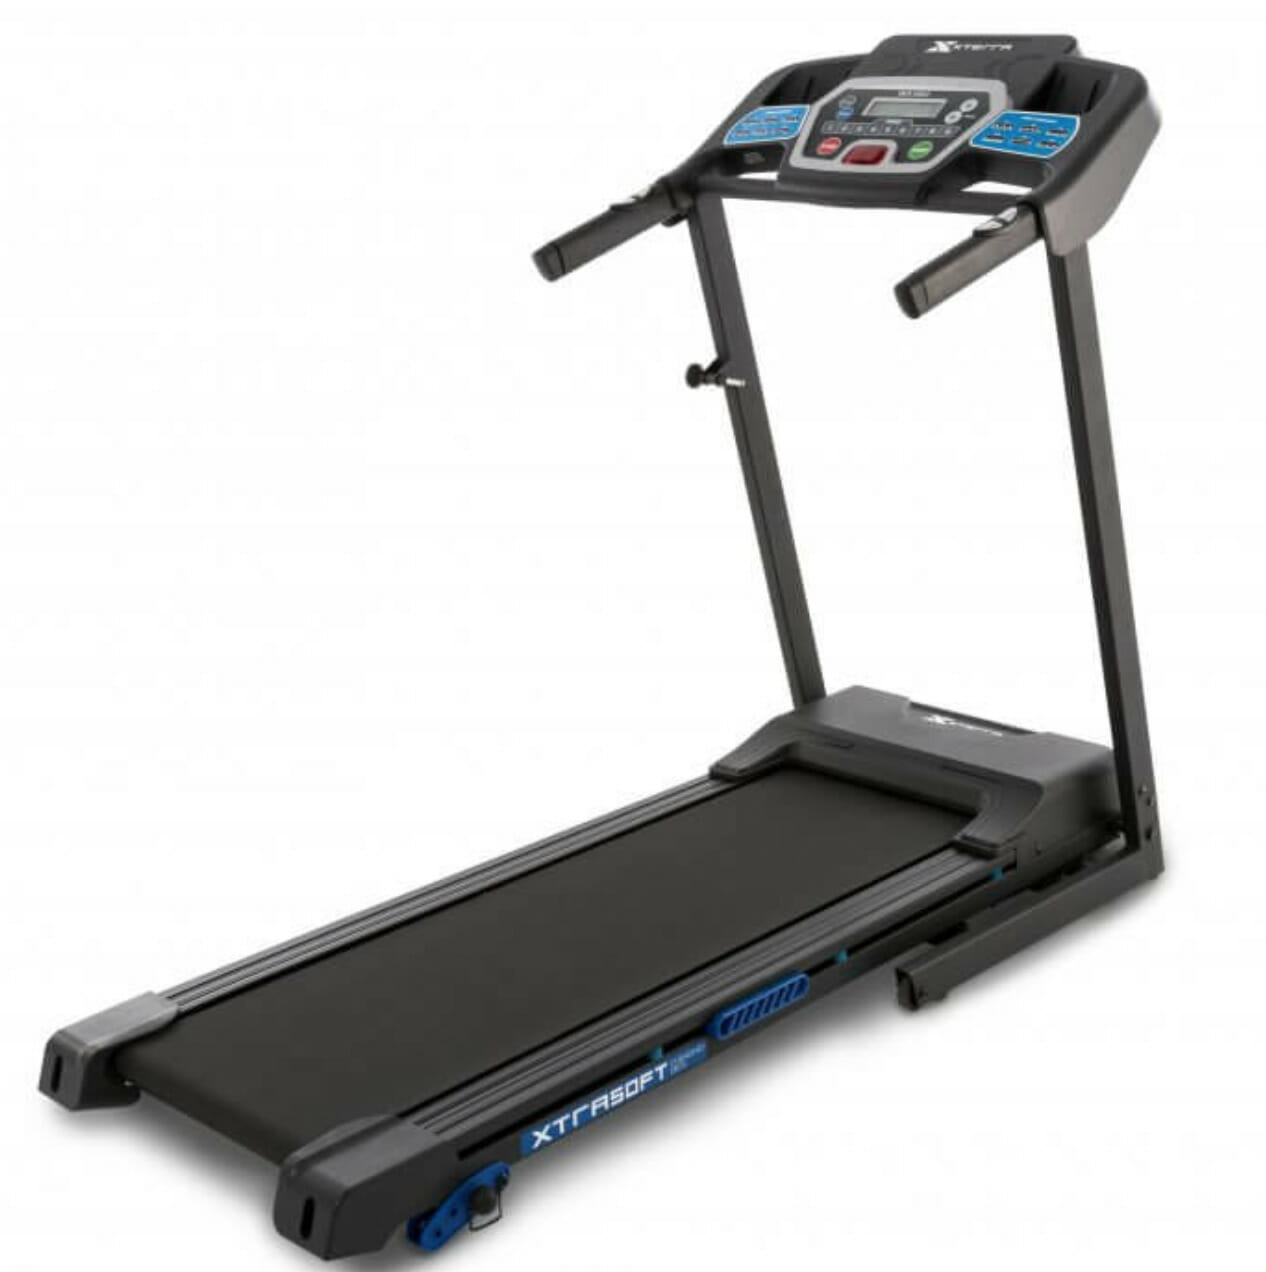 XTERRA TRX1000 treadmill review